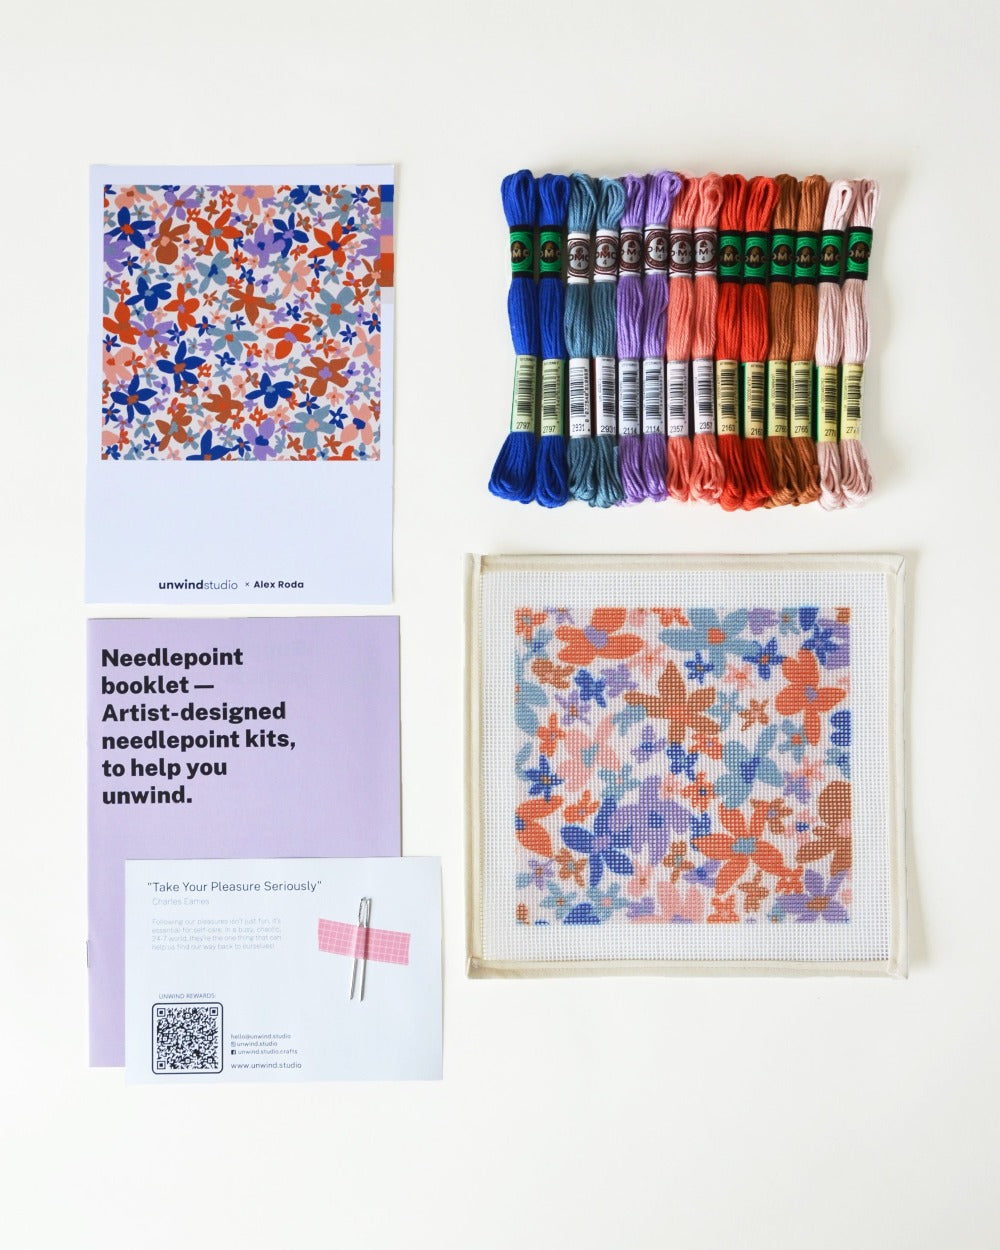 Laura Flor Sunglasses Case Needlepoint Kit by Unwind Studio